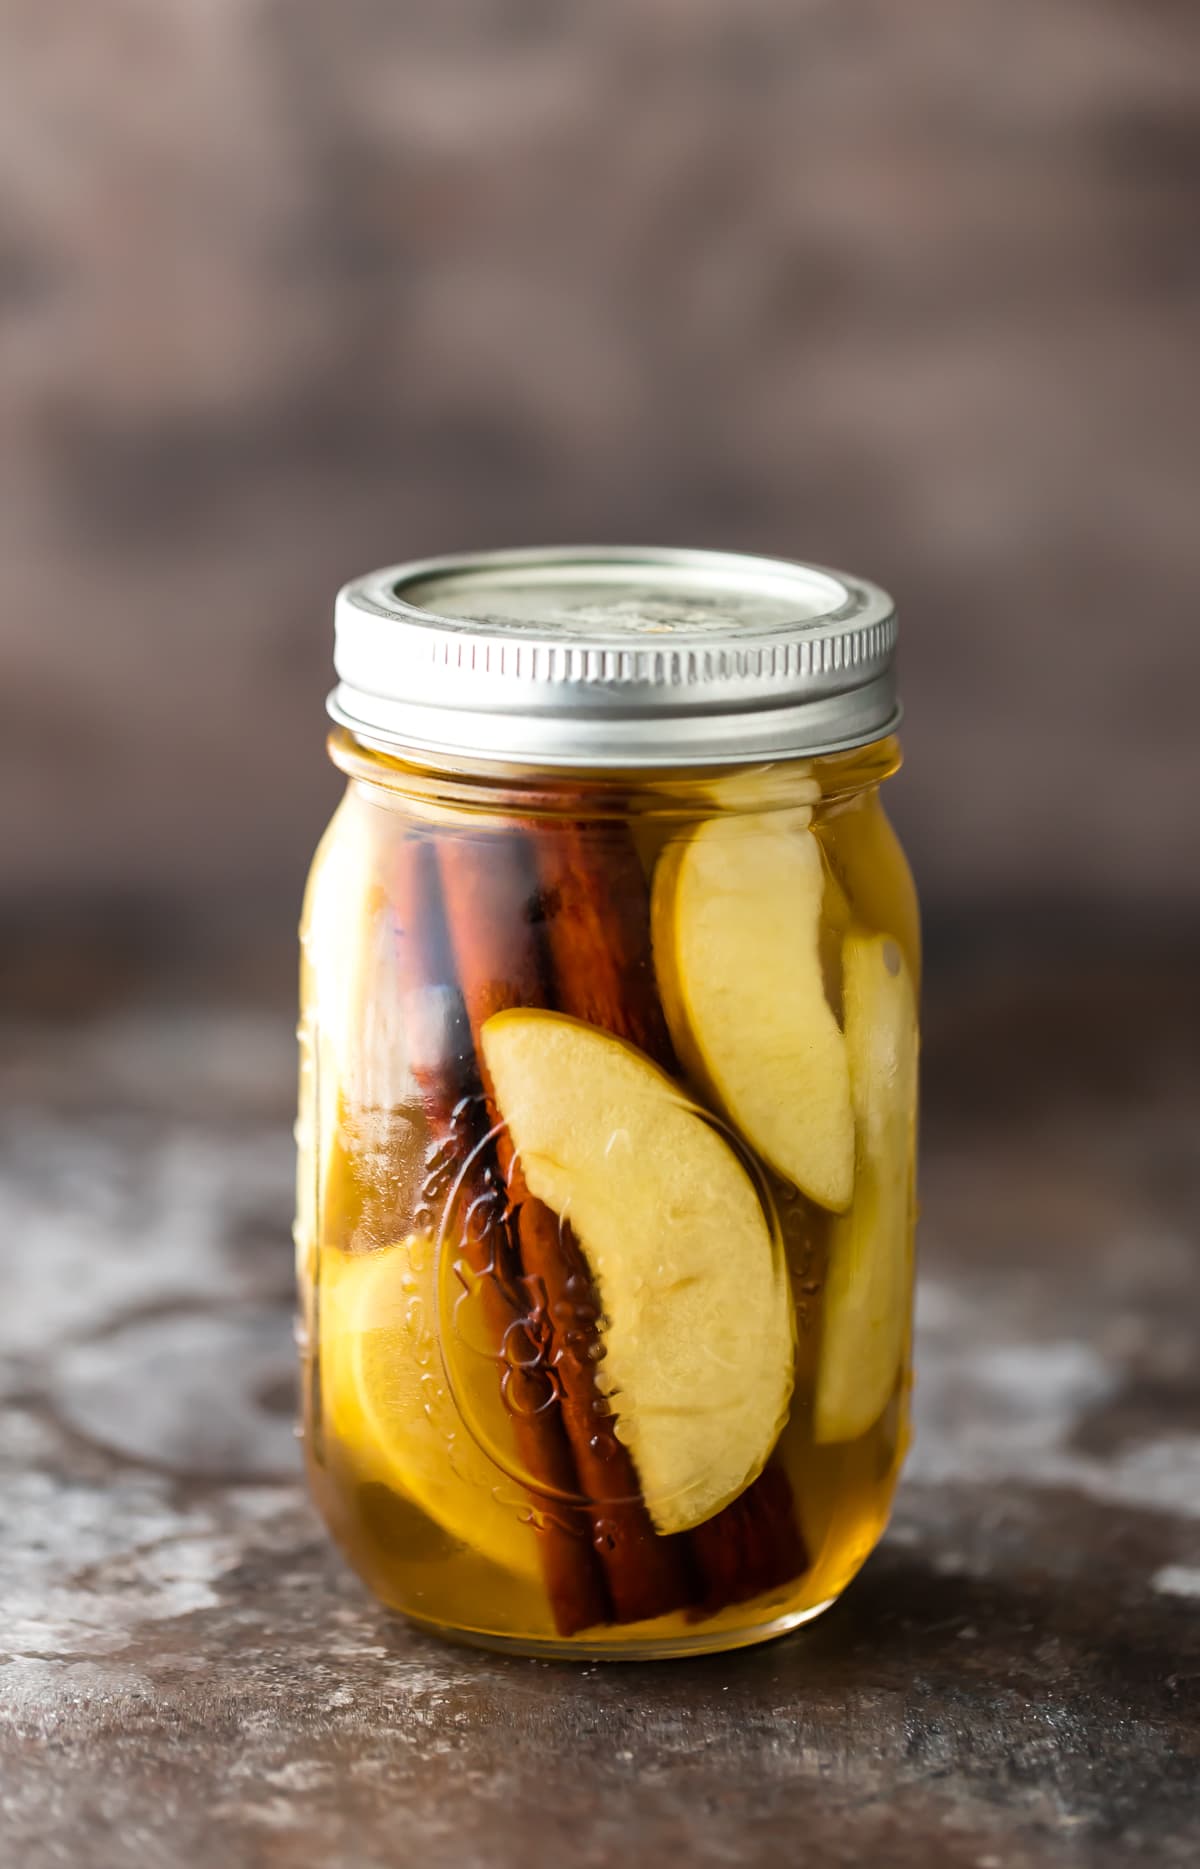 Homemade Vodka Recipe: A mason jar filled with apple slices, cinnamon sticks, and vodka